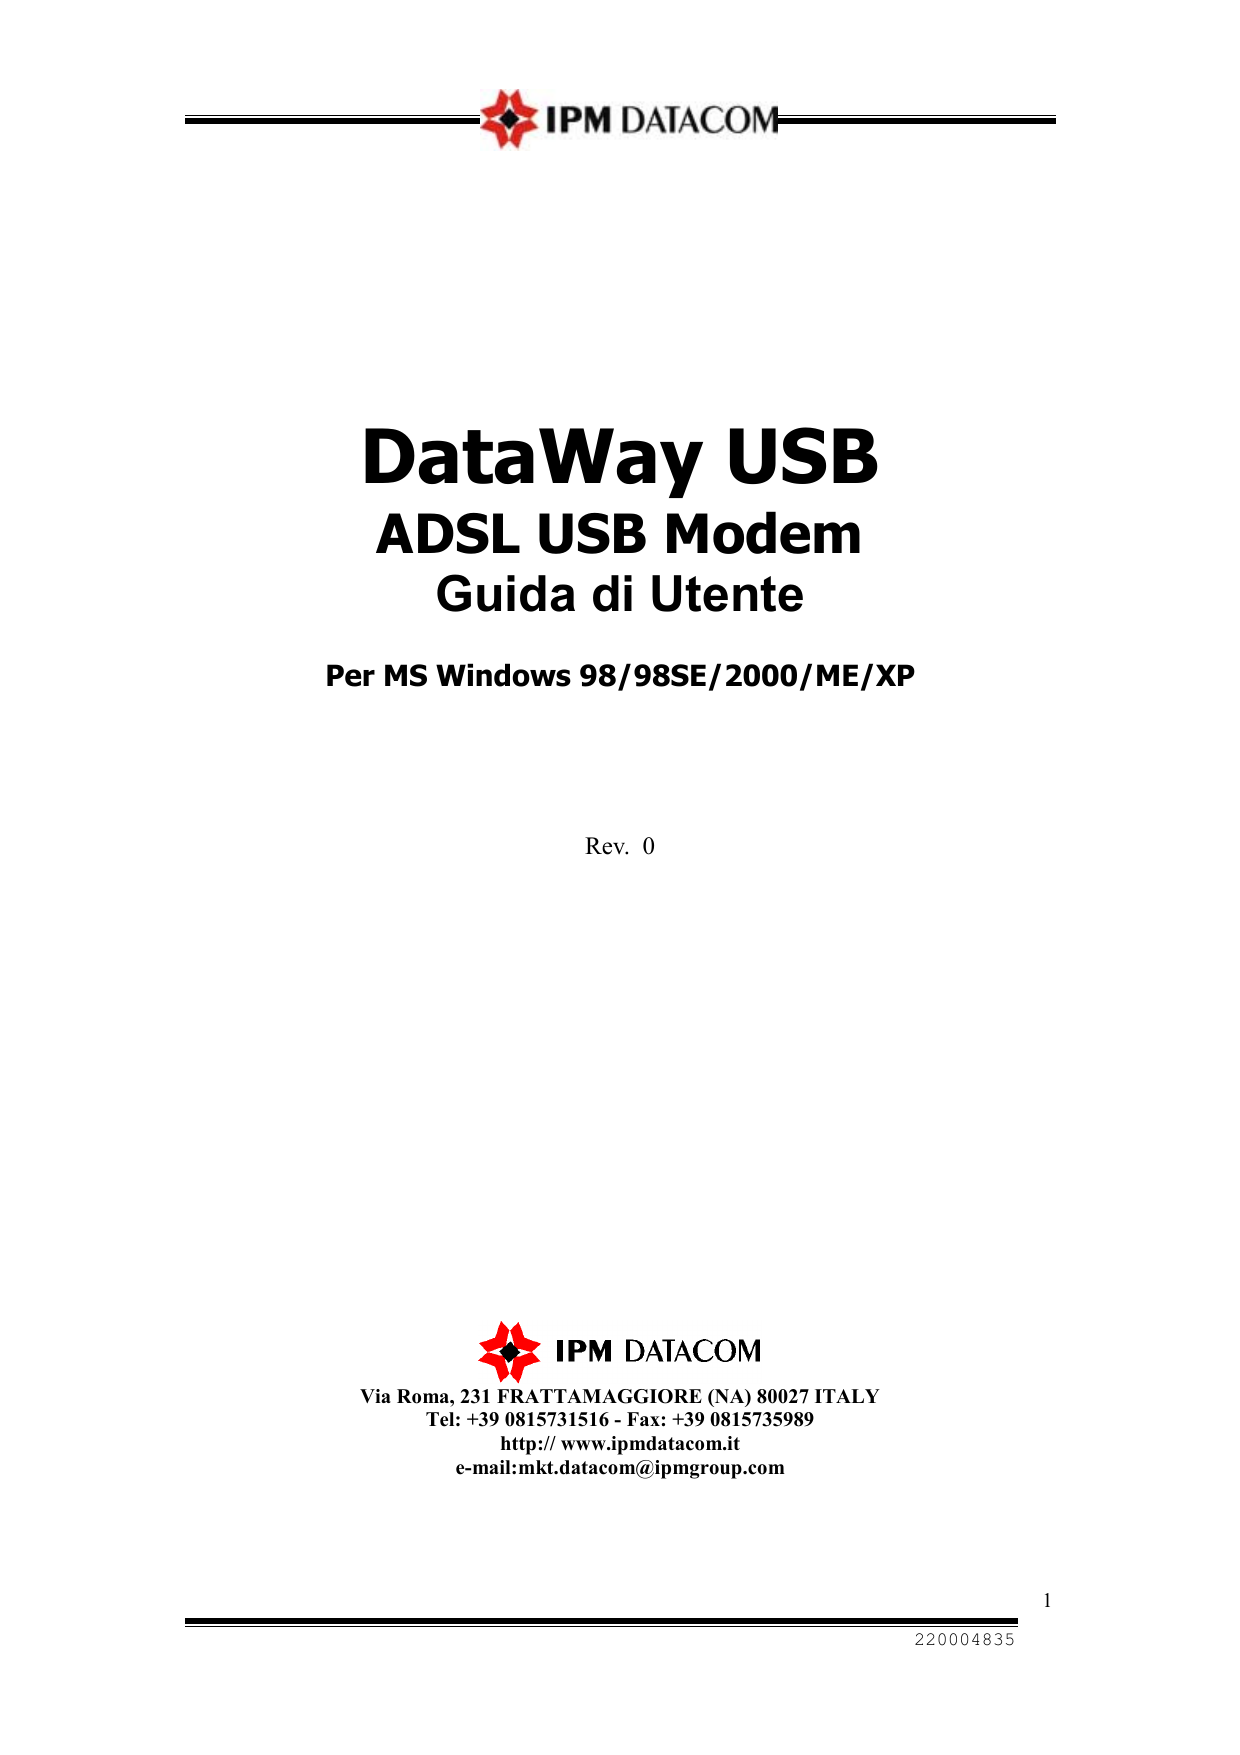 DRIVER FOR IPM DATACOM SPEEDWEB USB